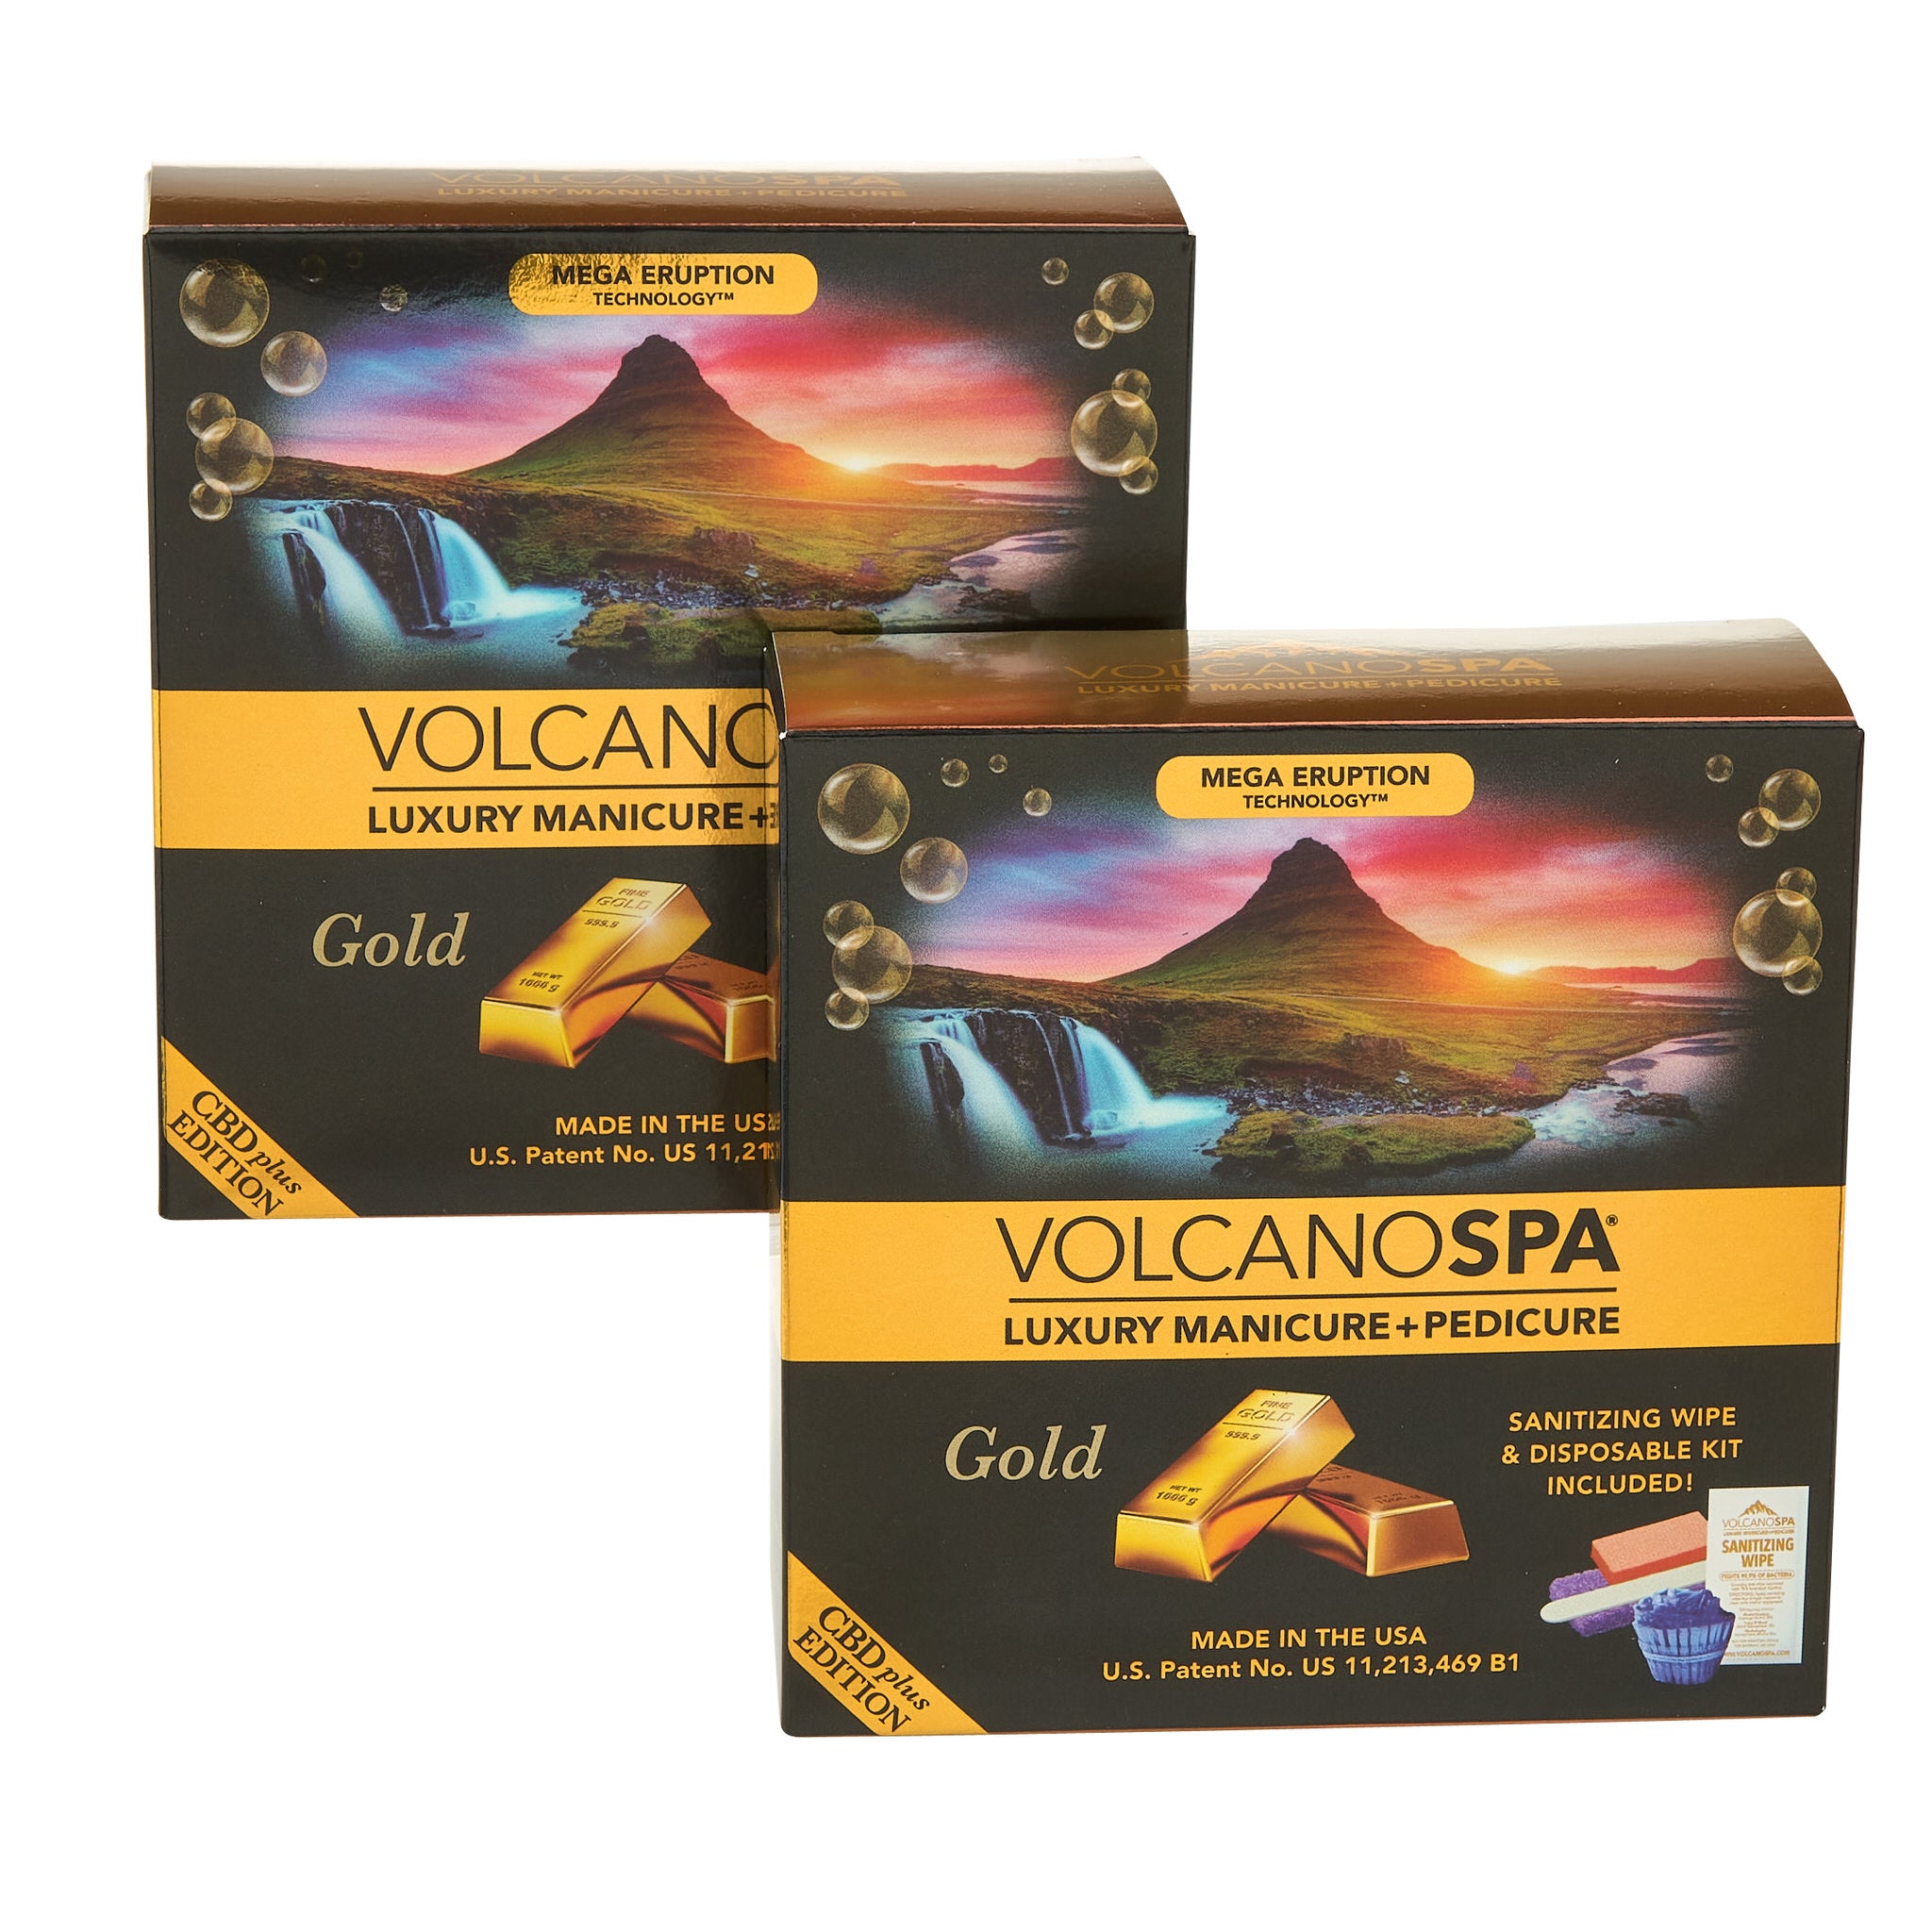 La Palm - Volcano Spa Pedicure Kit | Gold CBD - 10 steps